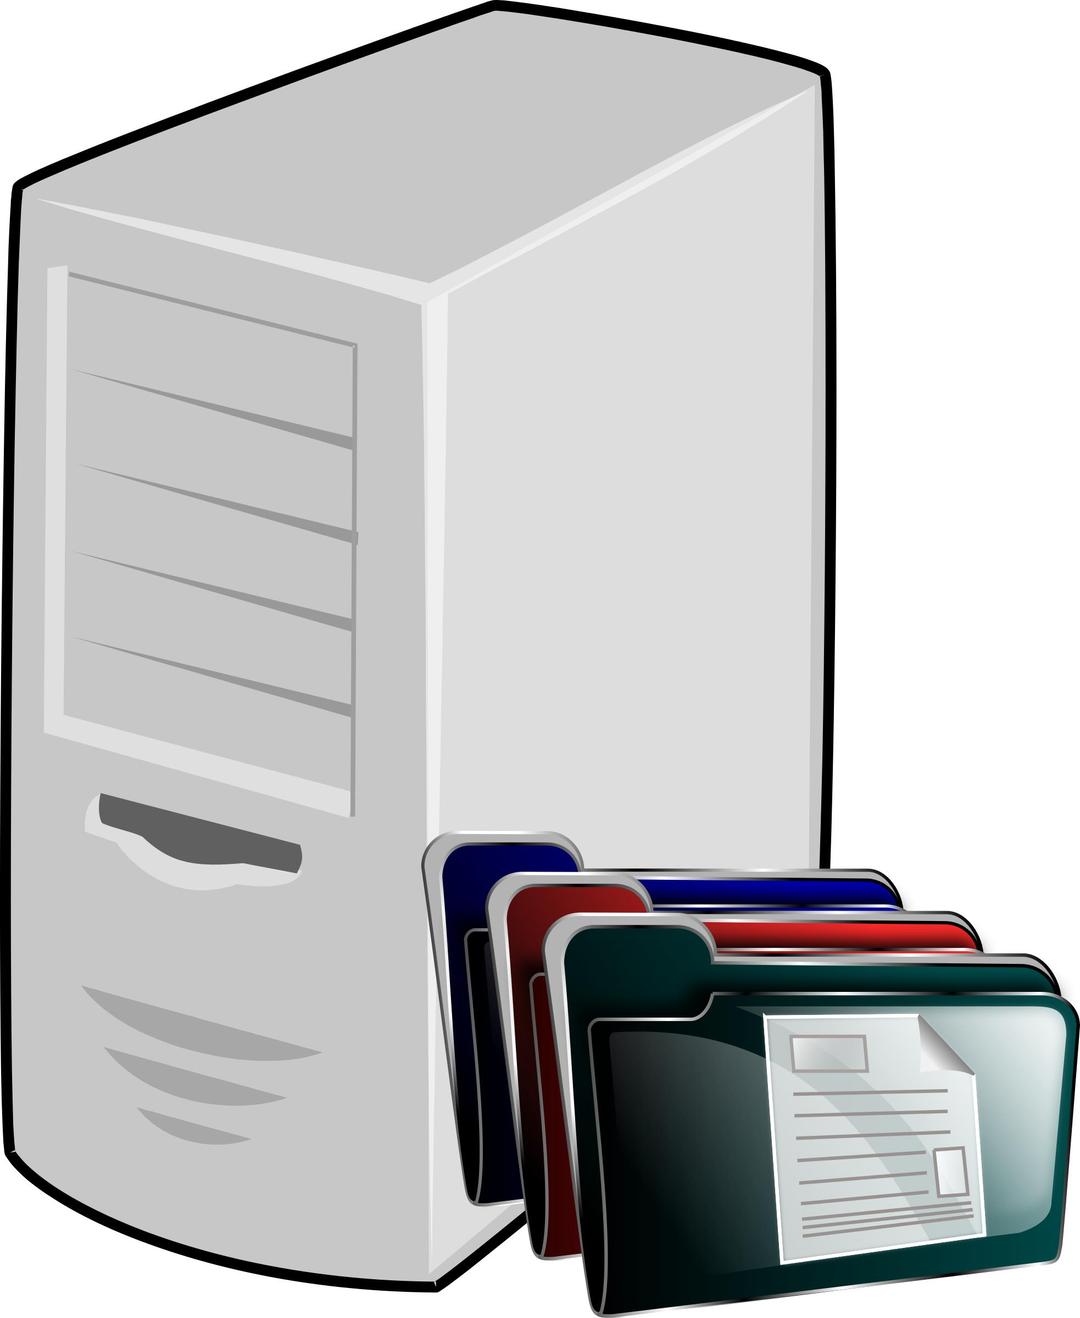 document management server png transparent